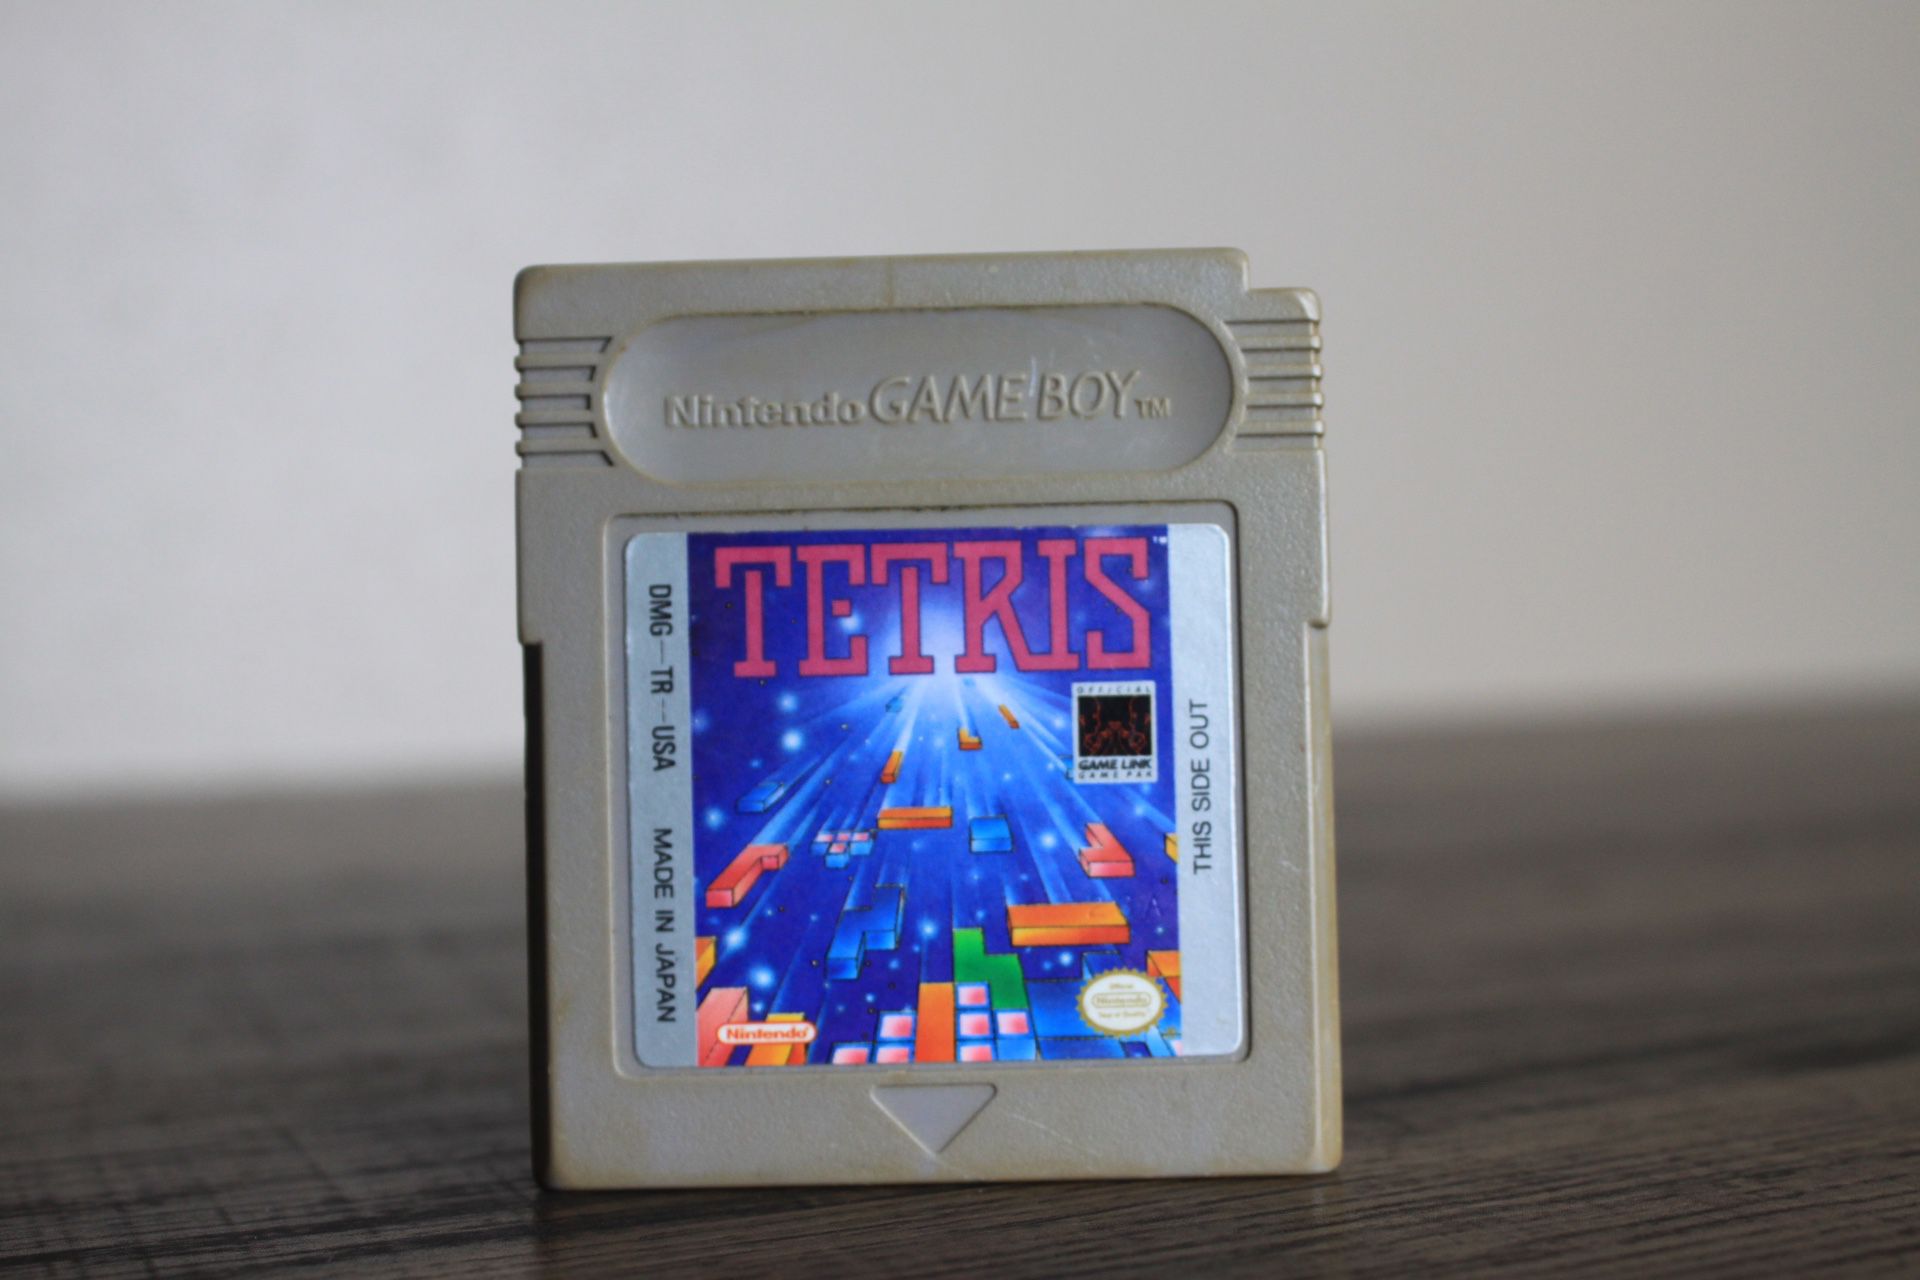 Nintendo GameBoy Tetris